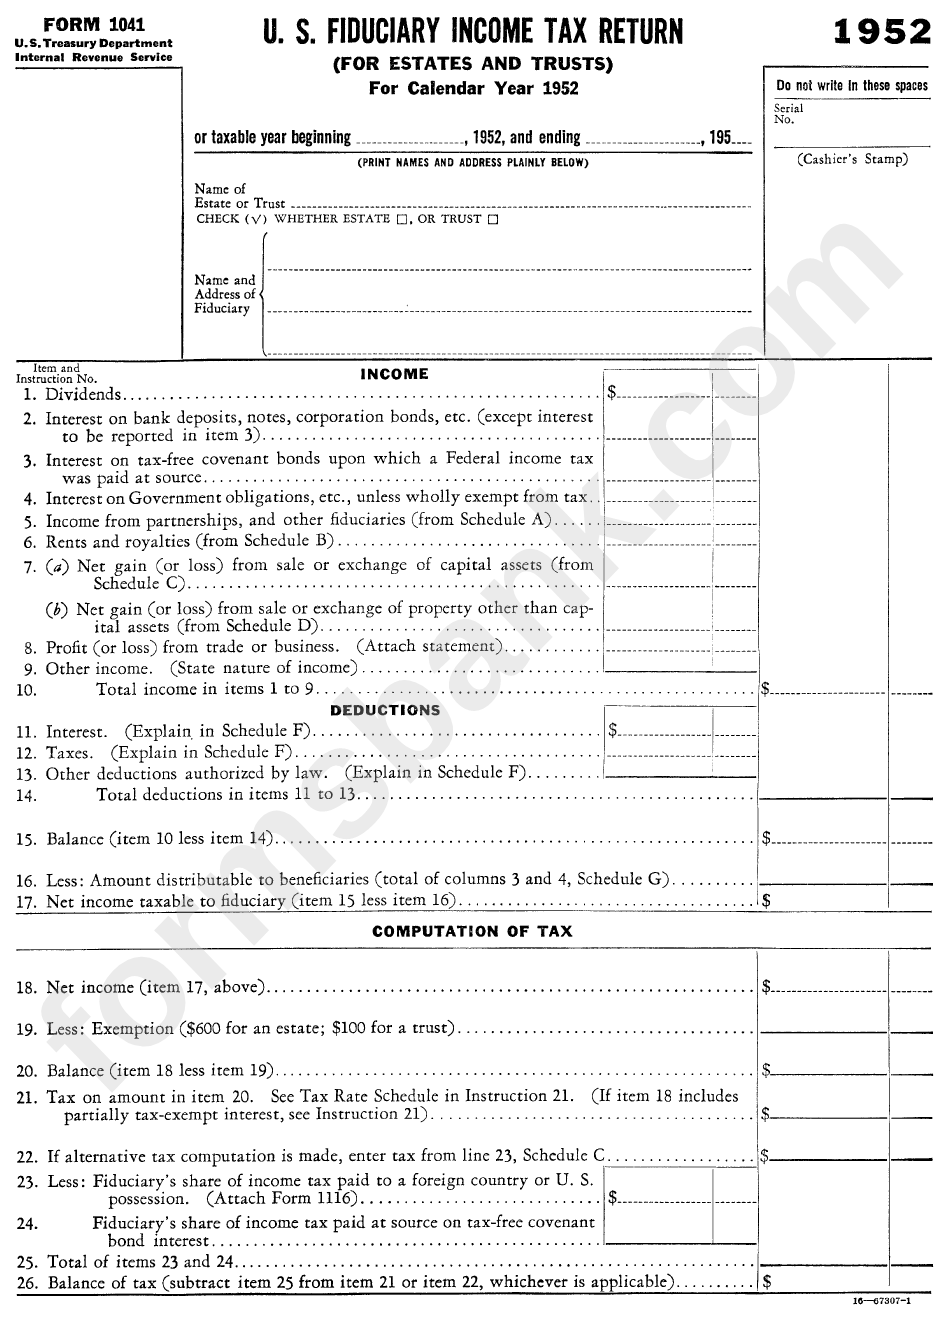 Form 1041 U.s. Fiduciary Tax Return (For Estates And Trusts